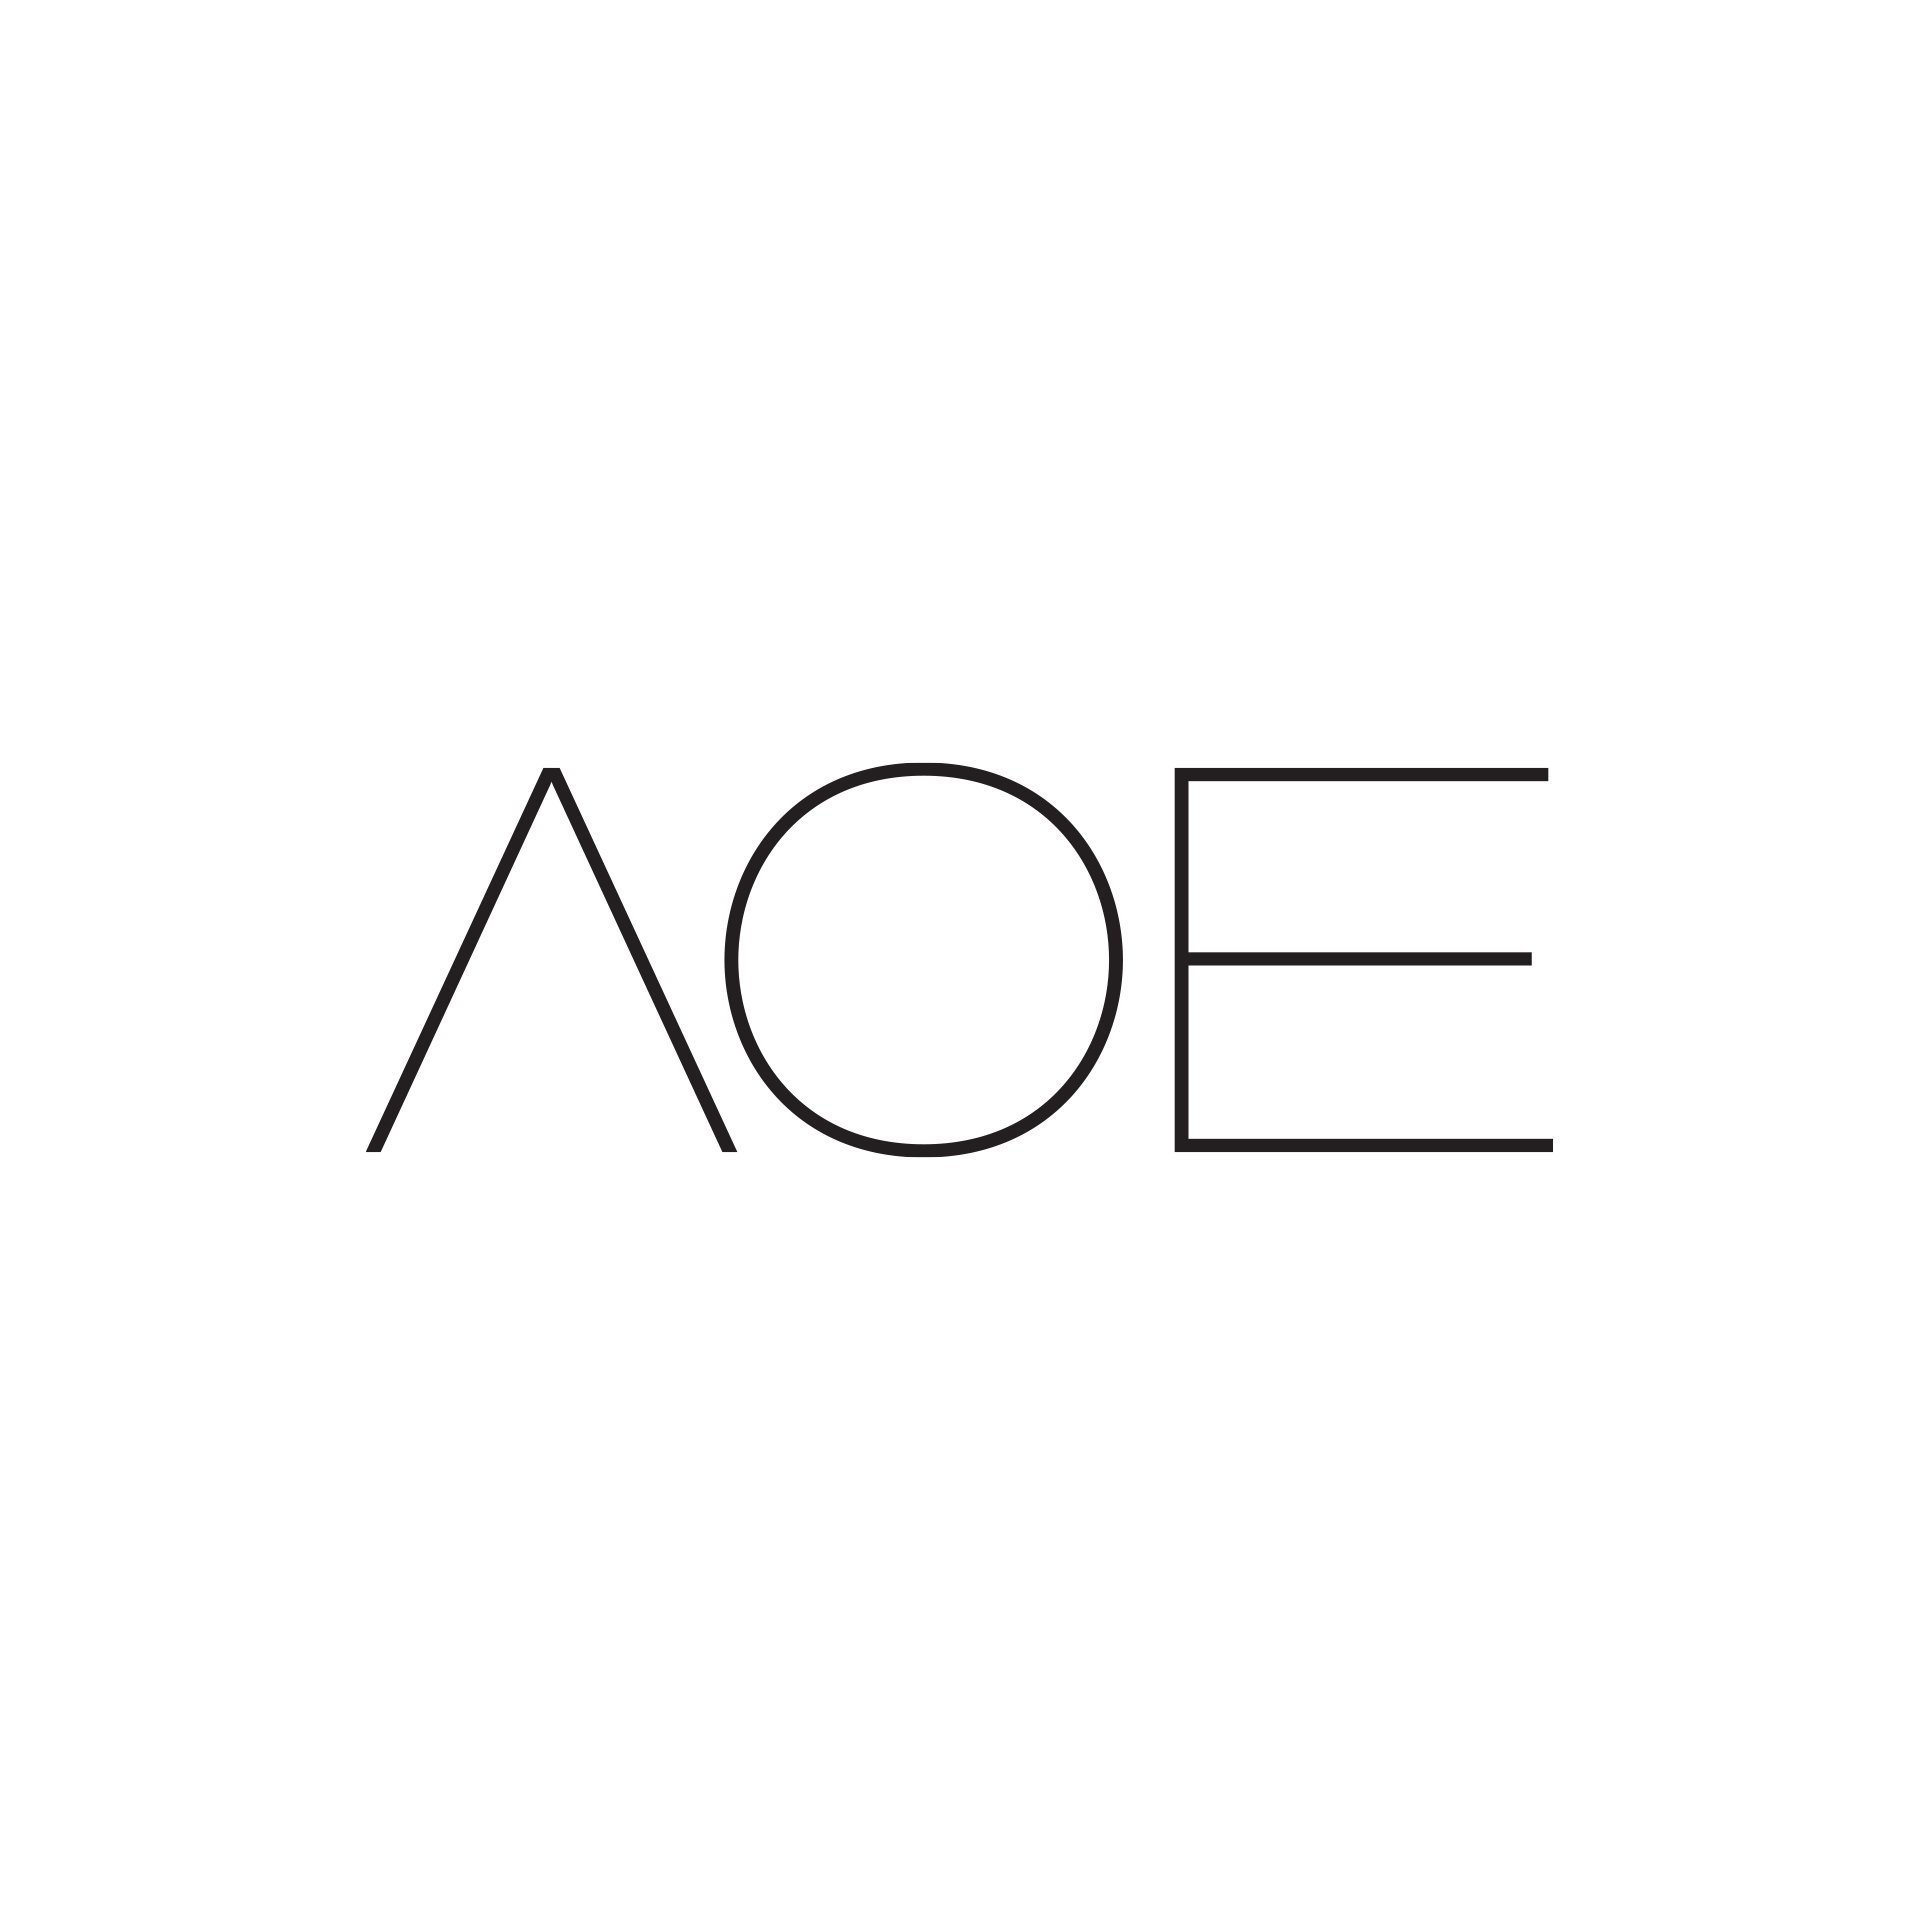 AOE wedding album identity design logo